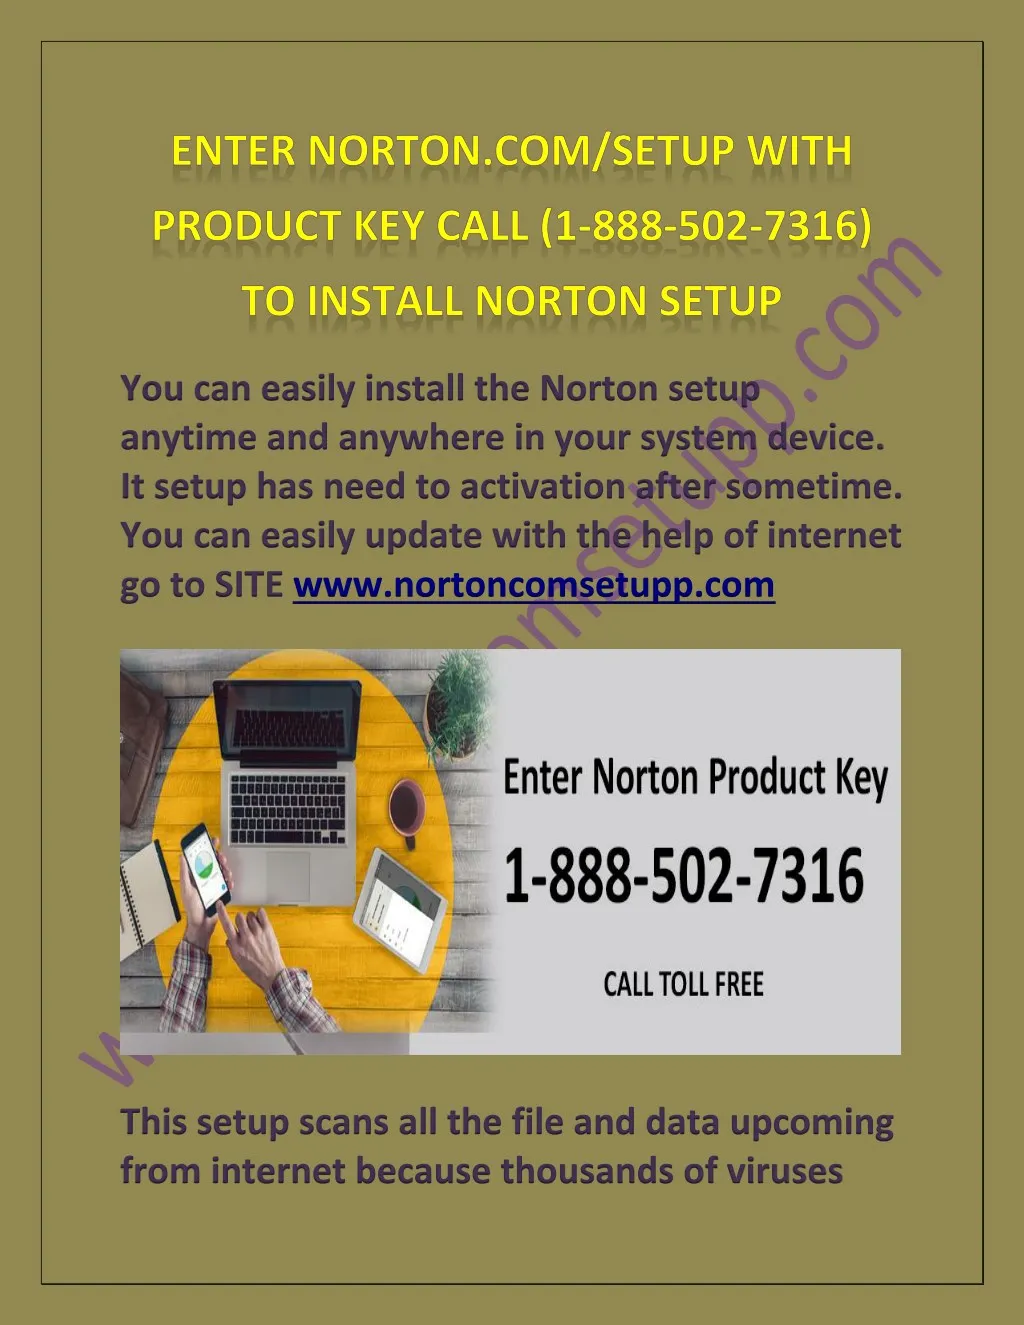 you can easily install the norton setup anytime